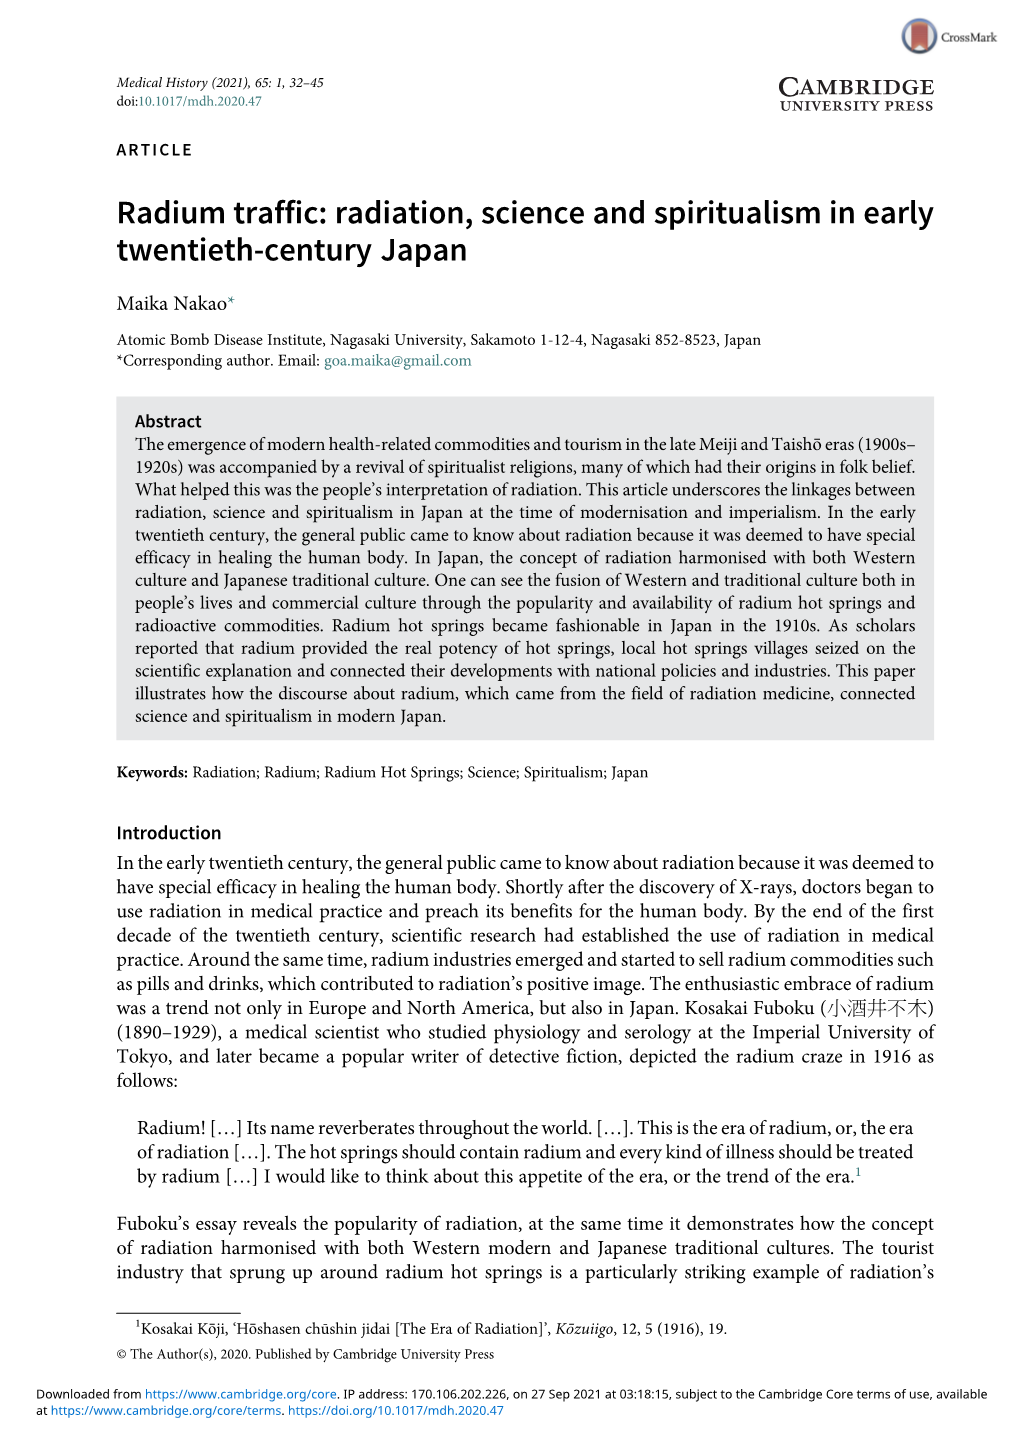 Radium Traffic: Radiation, Science and Spiritualism in Early Twentieth-Century Japan